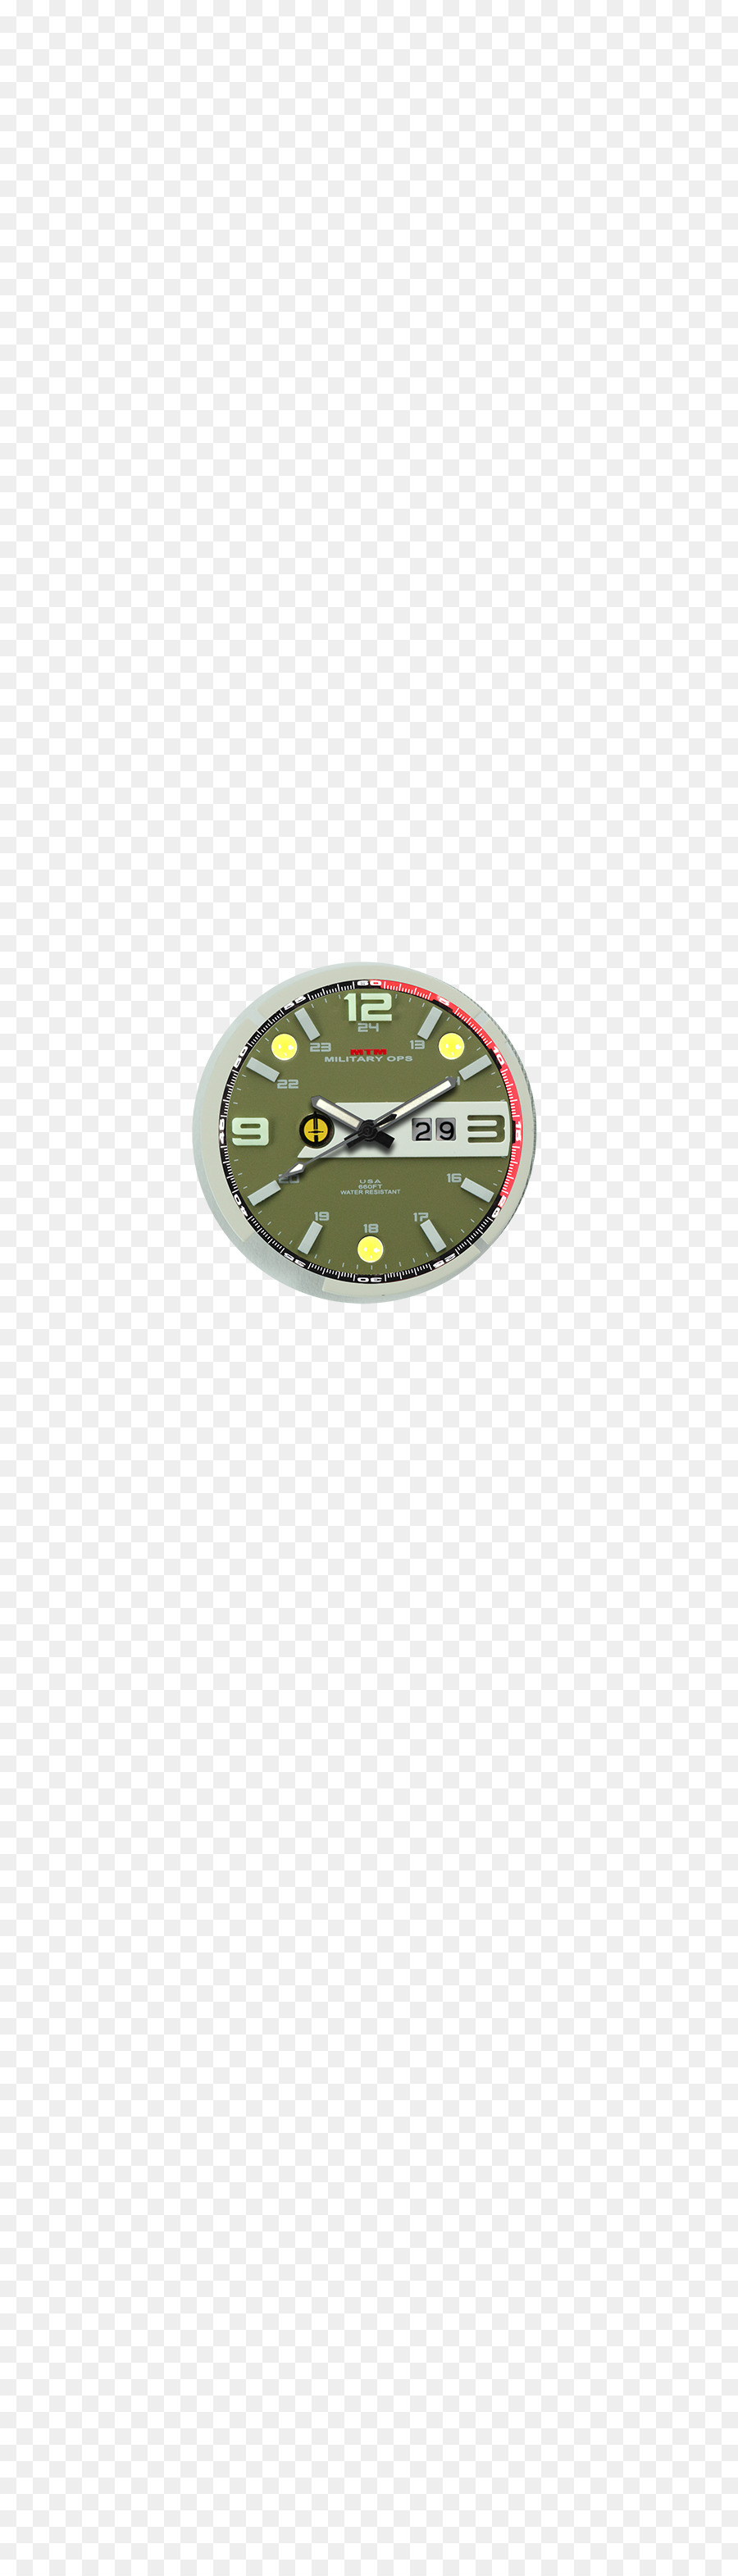 Militär-Zifferblatt Grün - Uhr